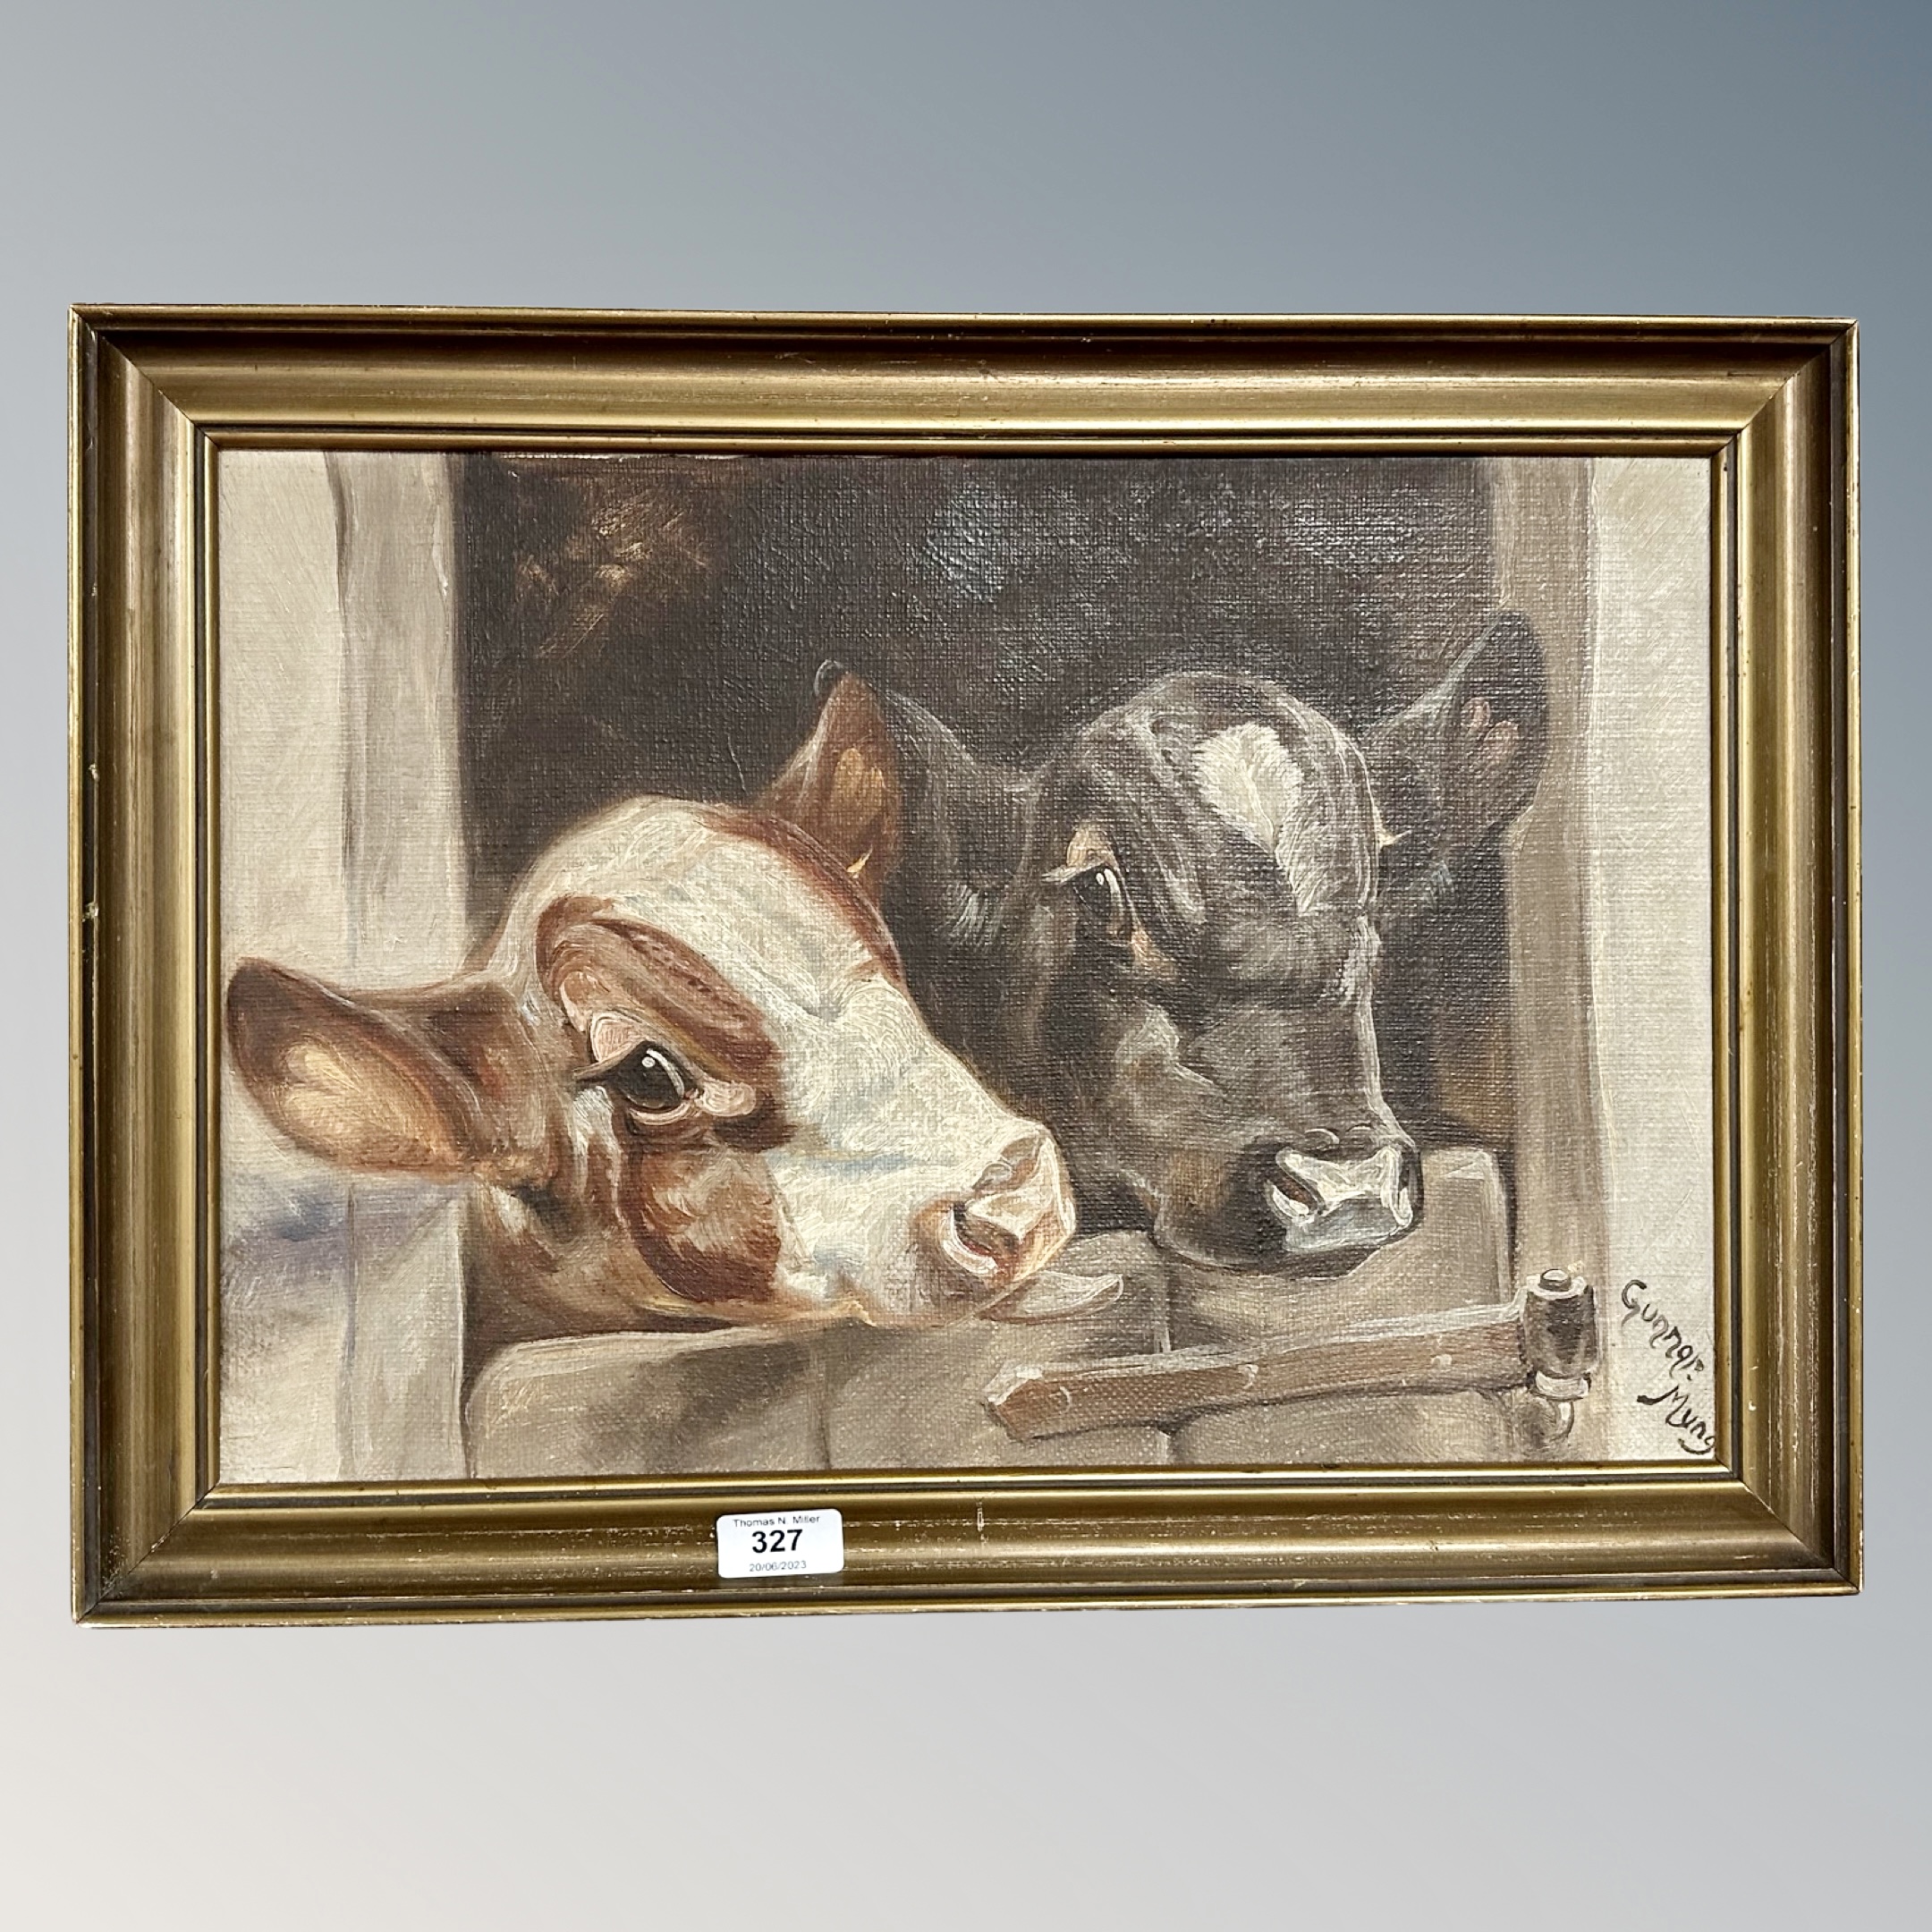 Gunnor Mung : Two calves at a barn door, oil on canvas,